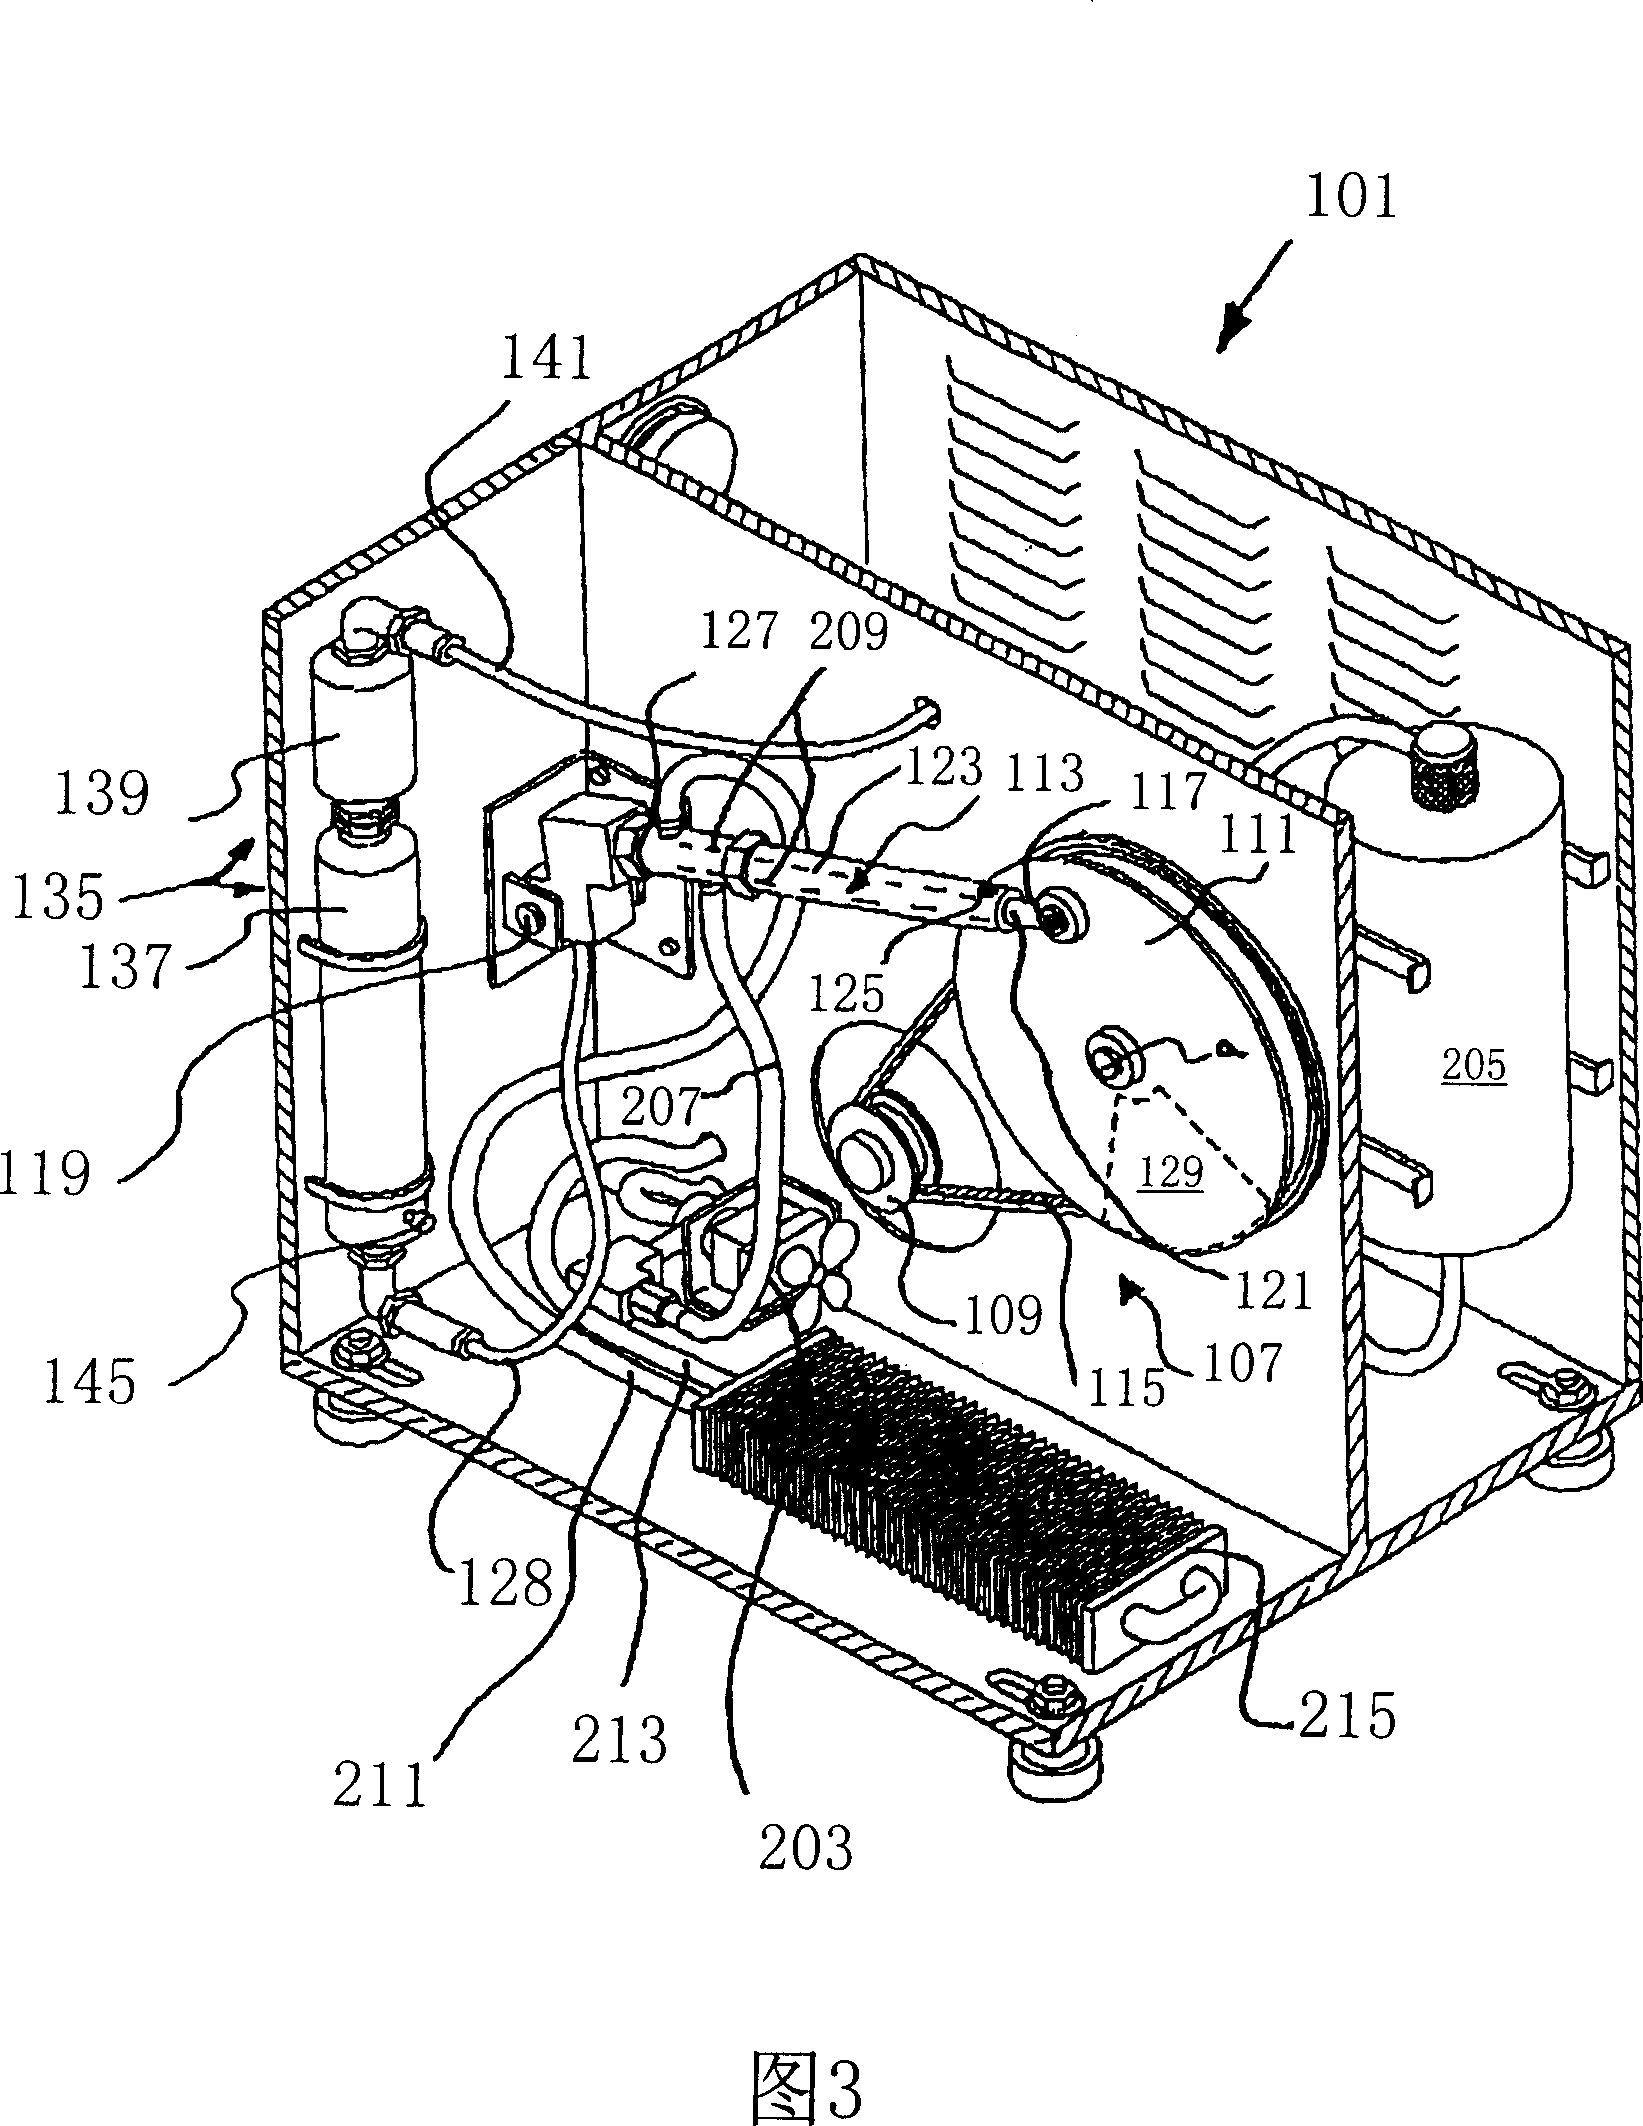 A system comprising a compressor and a portable pneumatic pressure reservoir